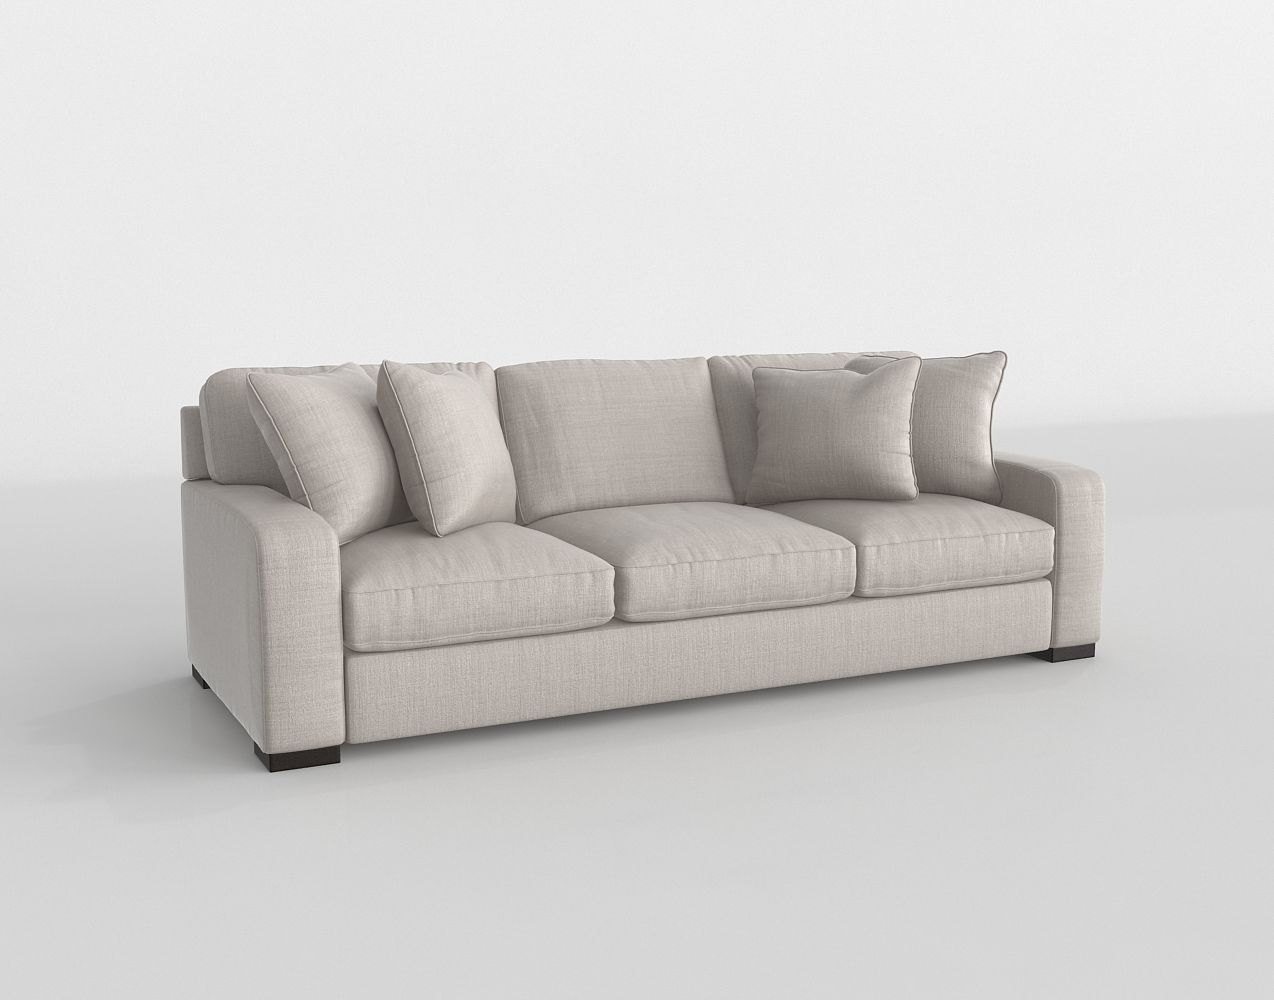 3d Bangor Xxl Sofa With Pillows Macy S Furniture Glancing Eye